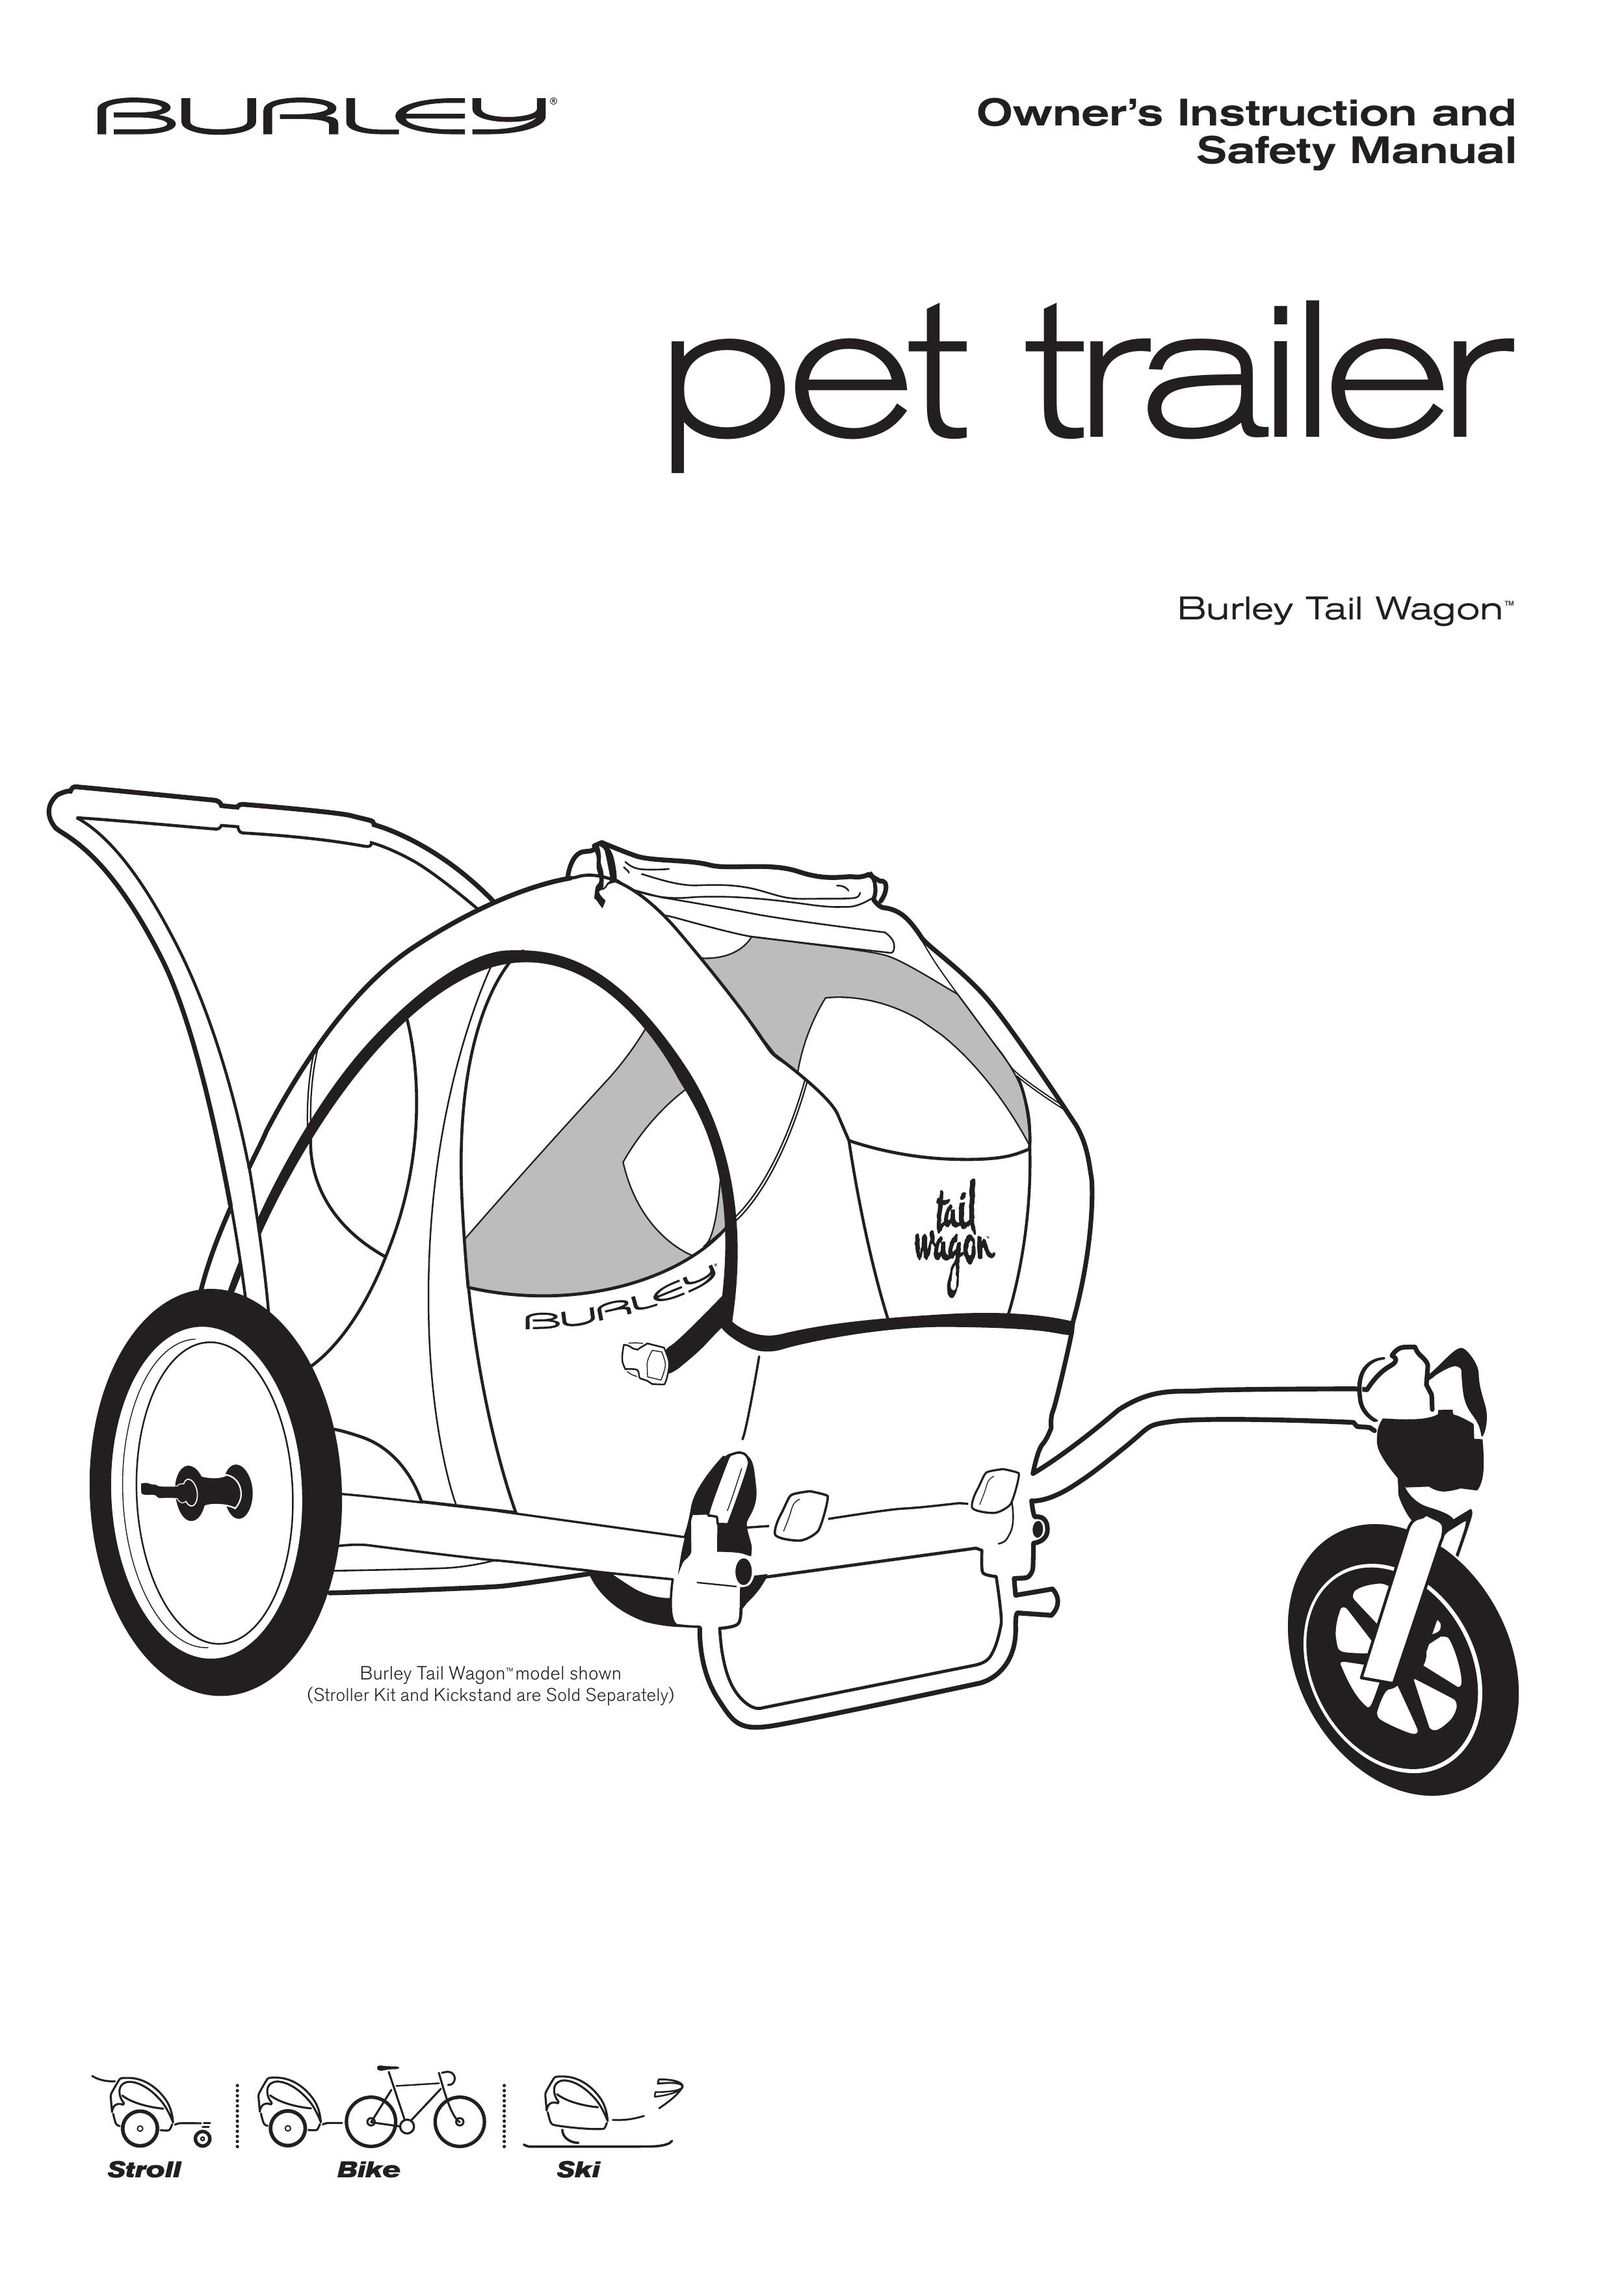 Burley Pet Trailer Bicycle Accessories User Manual